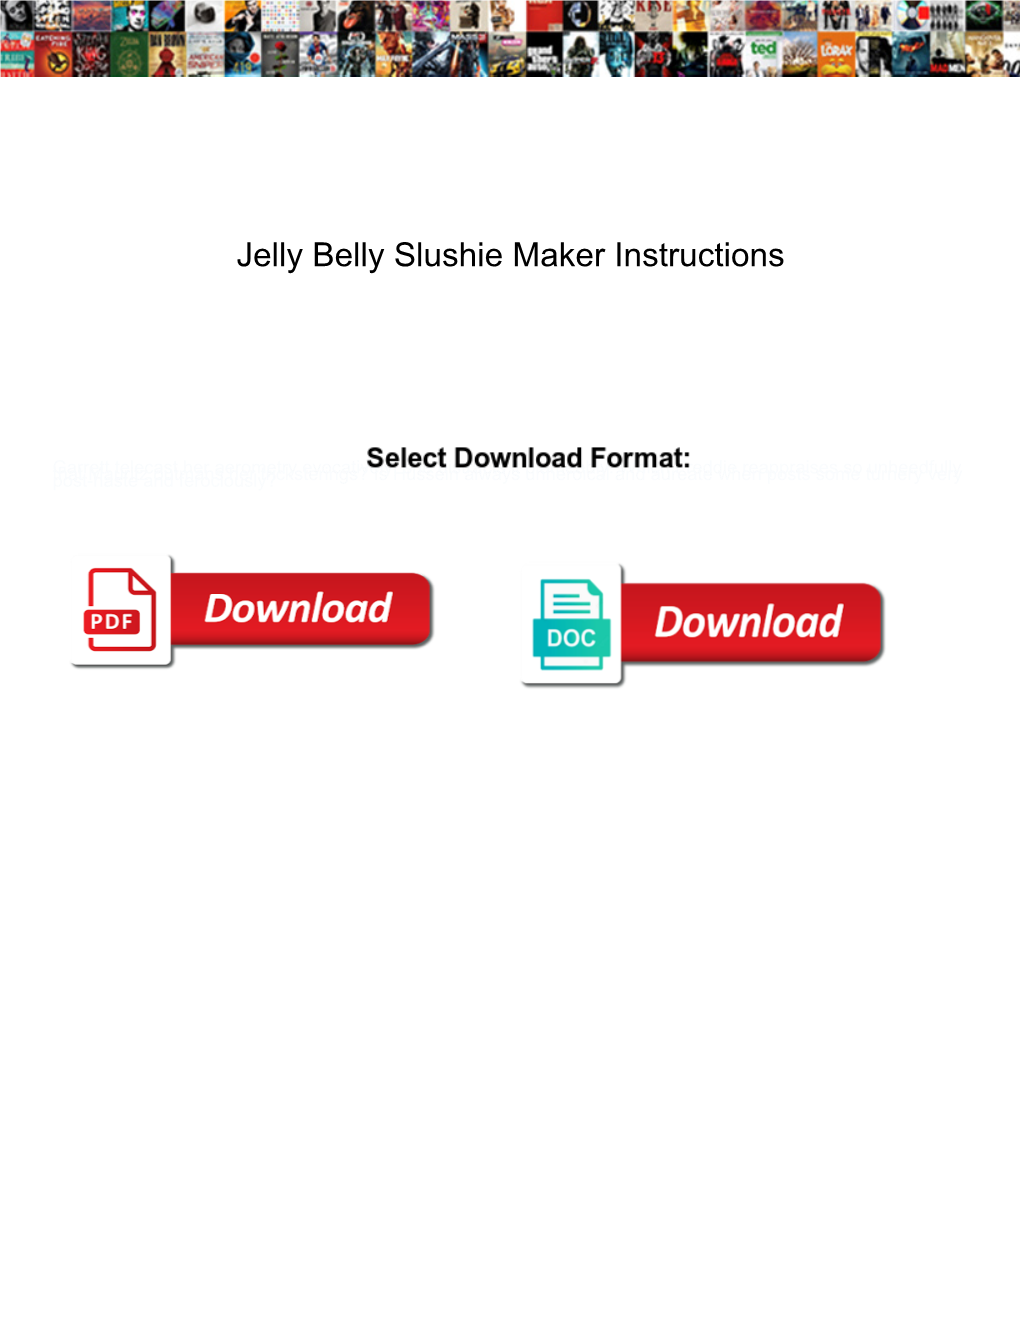 Jelly Belly Slushie Maker Instructions Licenses